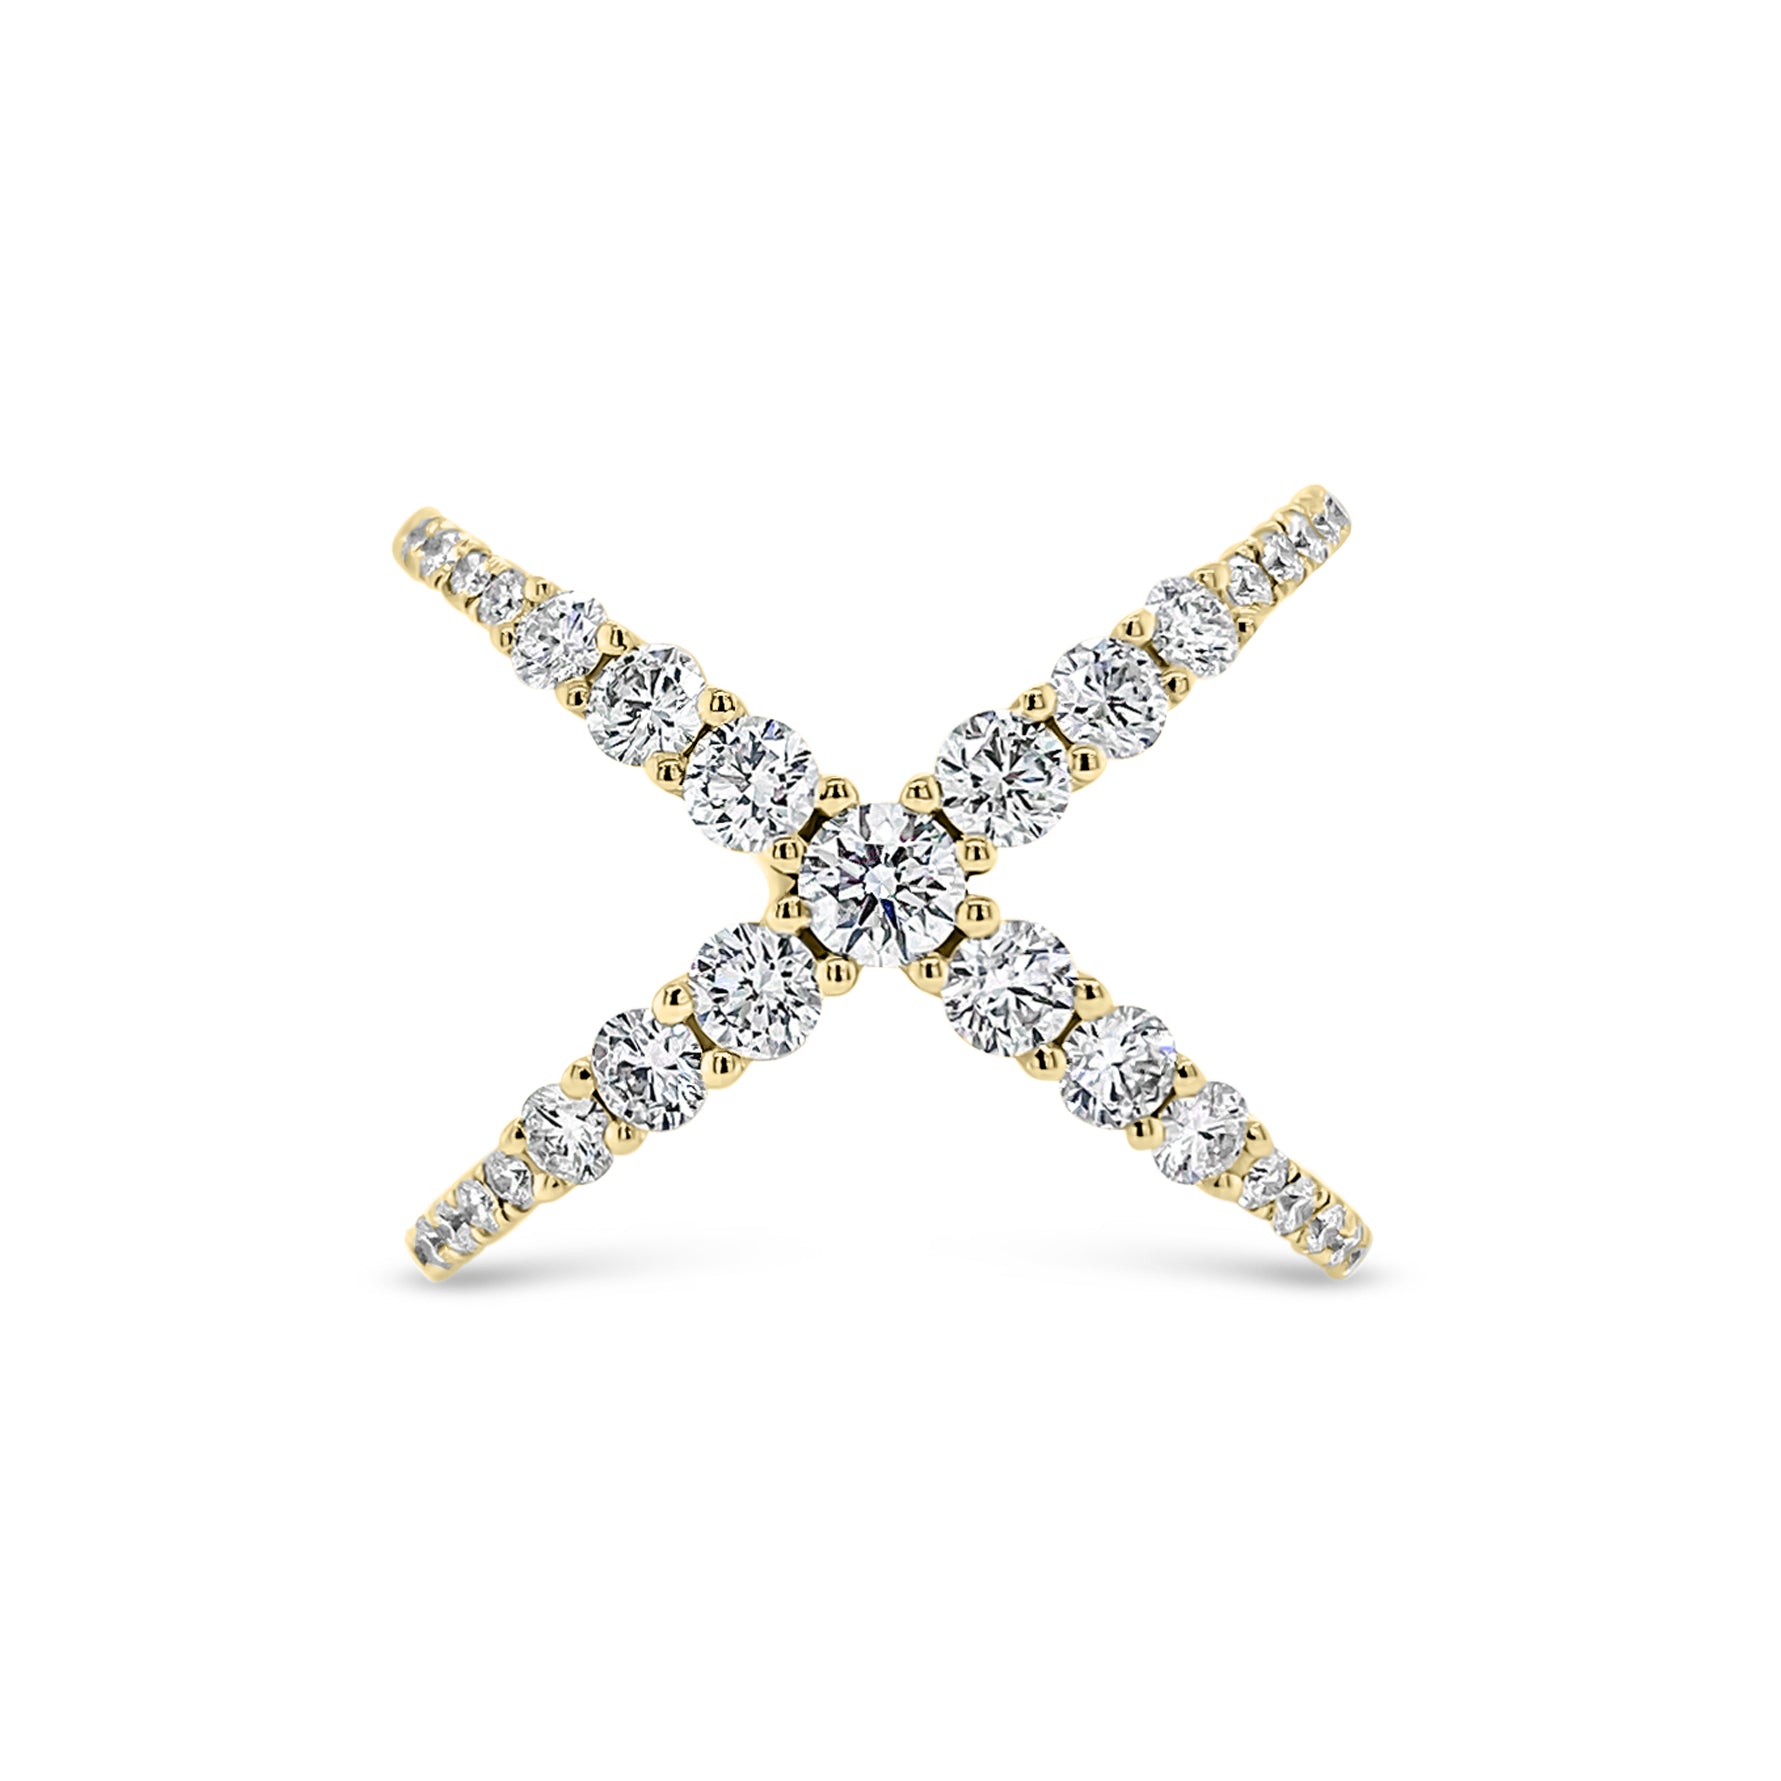 Cross Design Zircon Stone Adjustable Ring – Lamar Jewelry